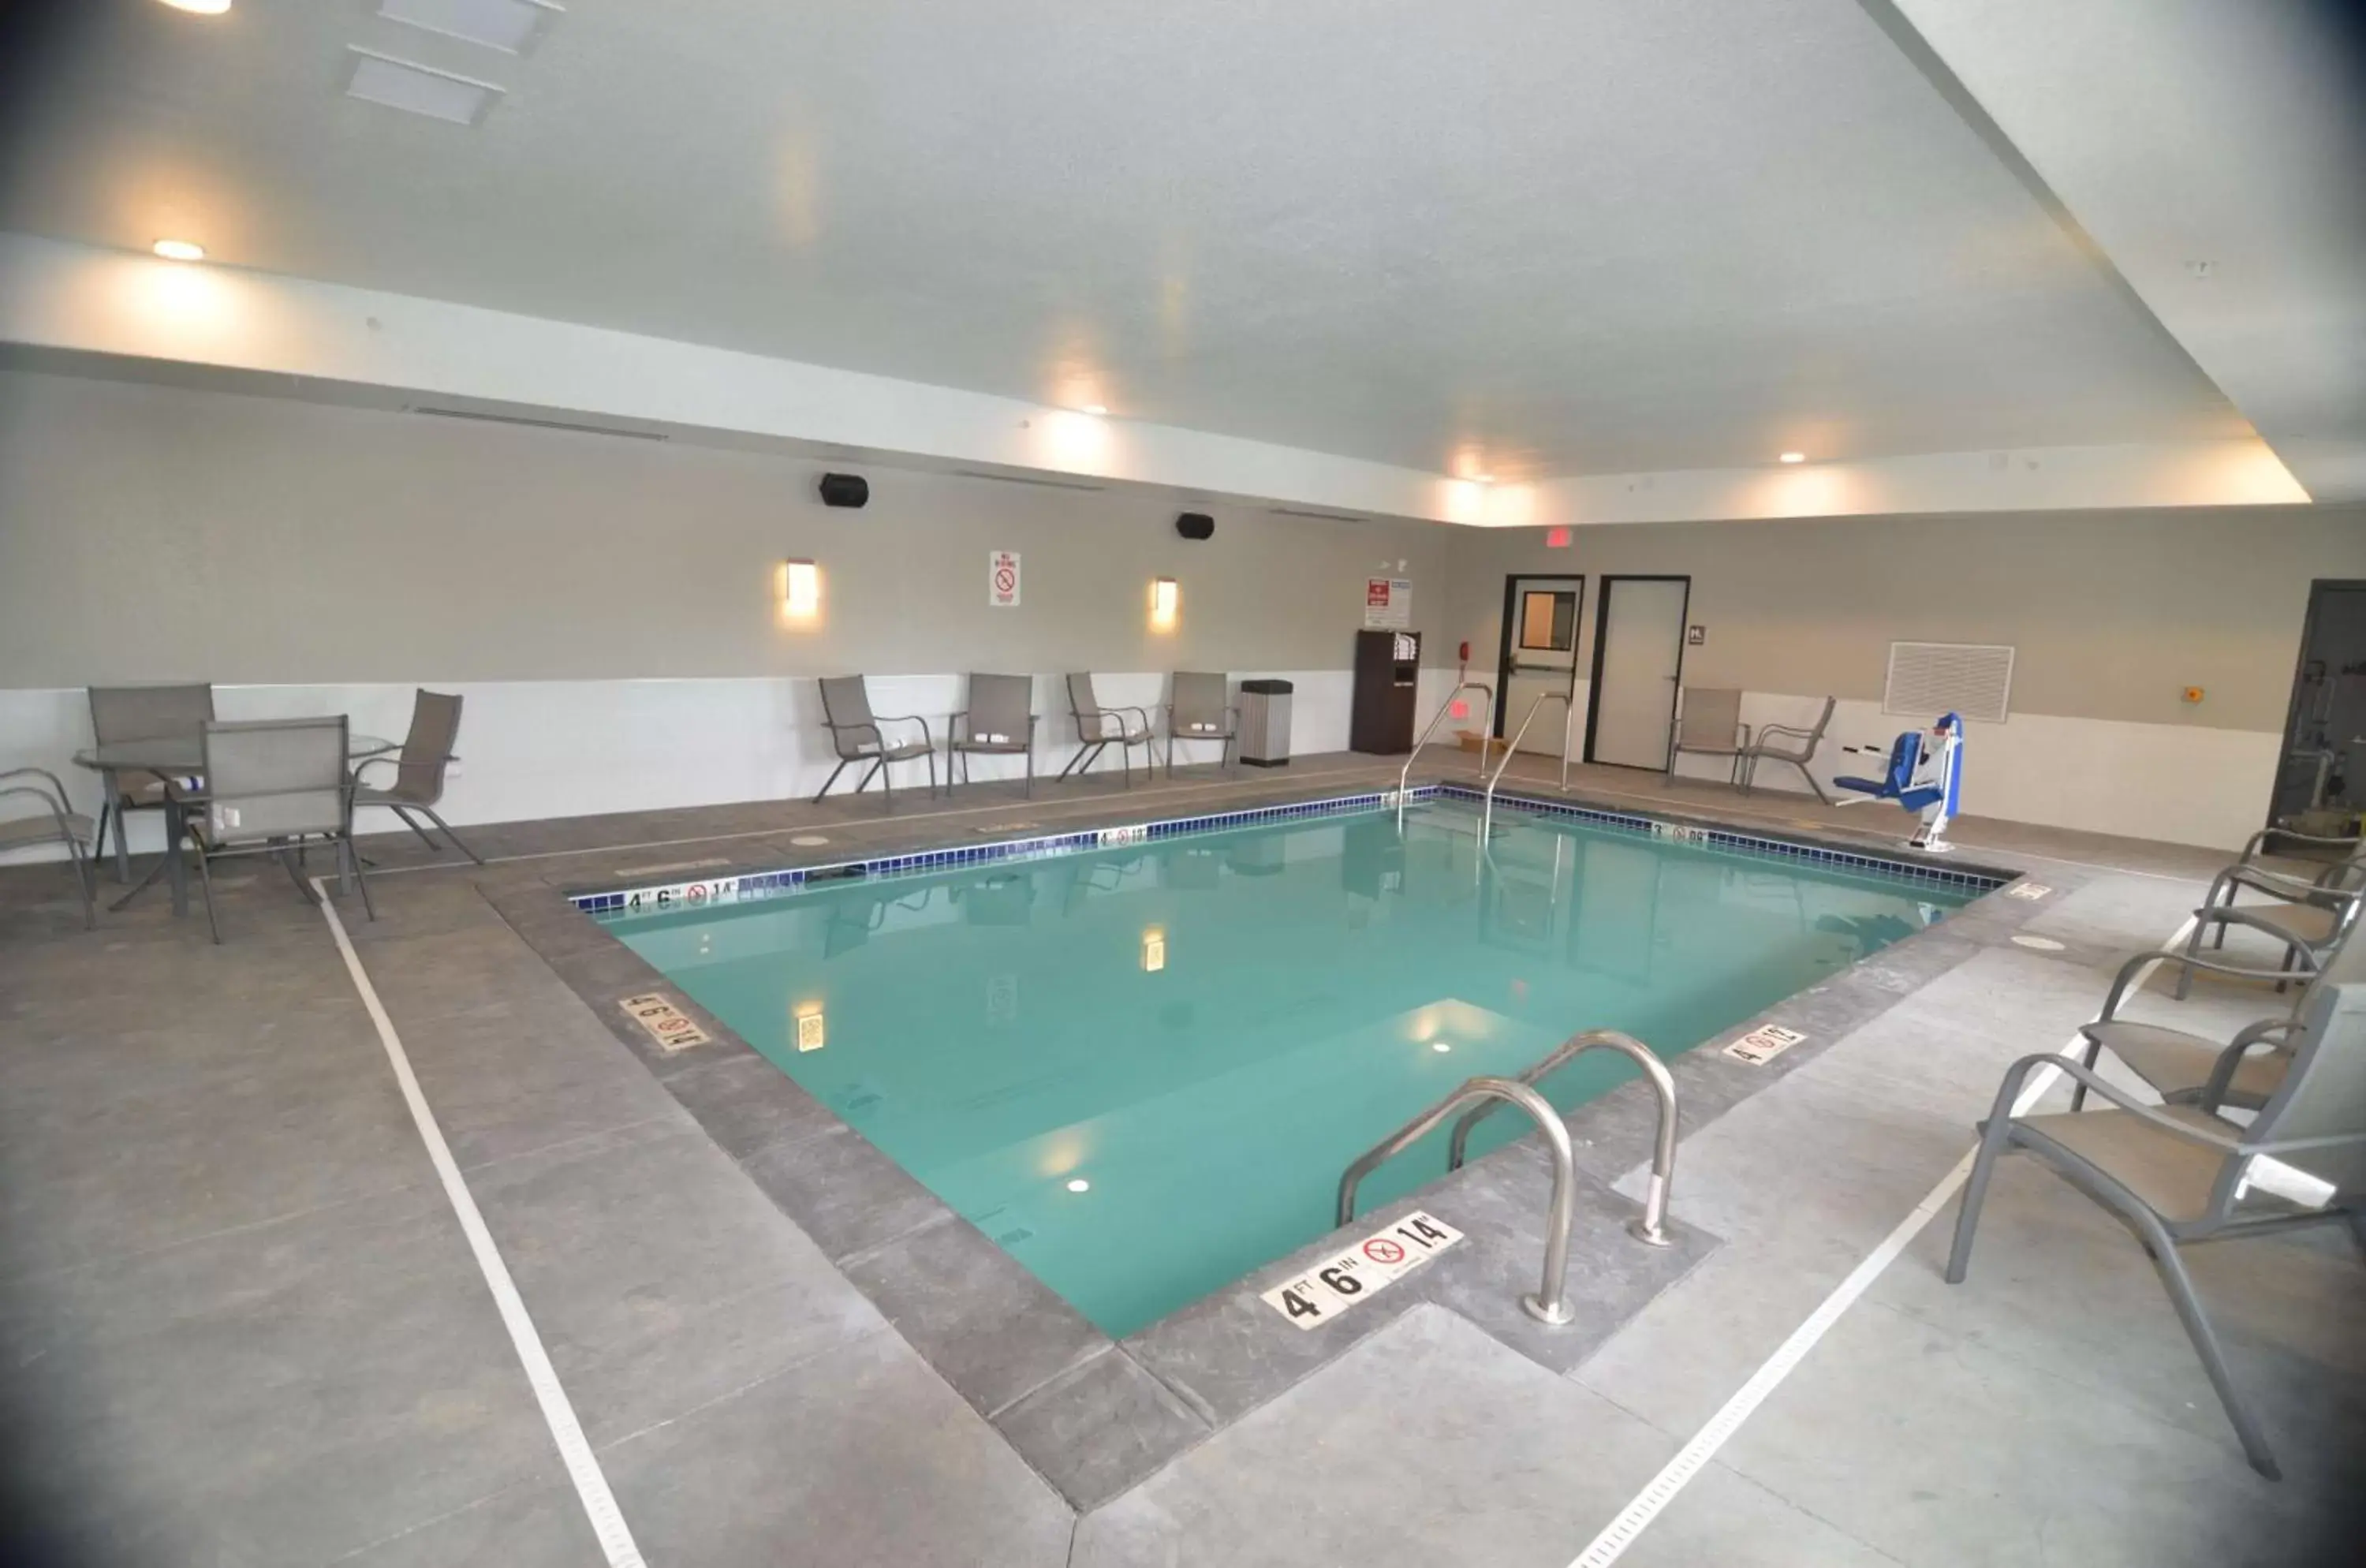 On site, Swimming Pool in Best Western Premier Ankeny Hotel